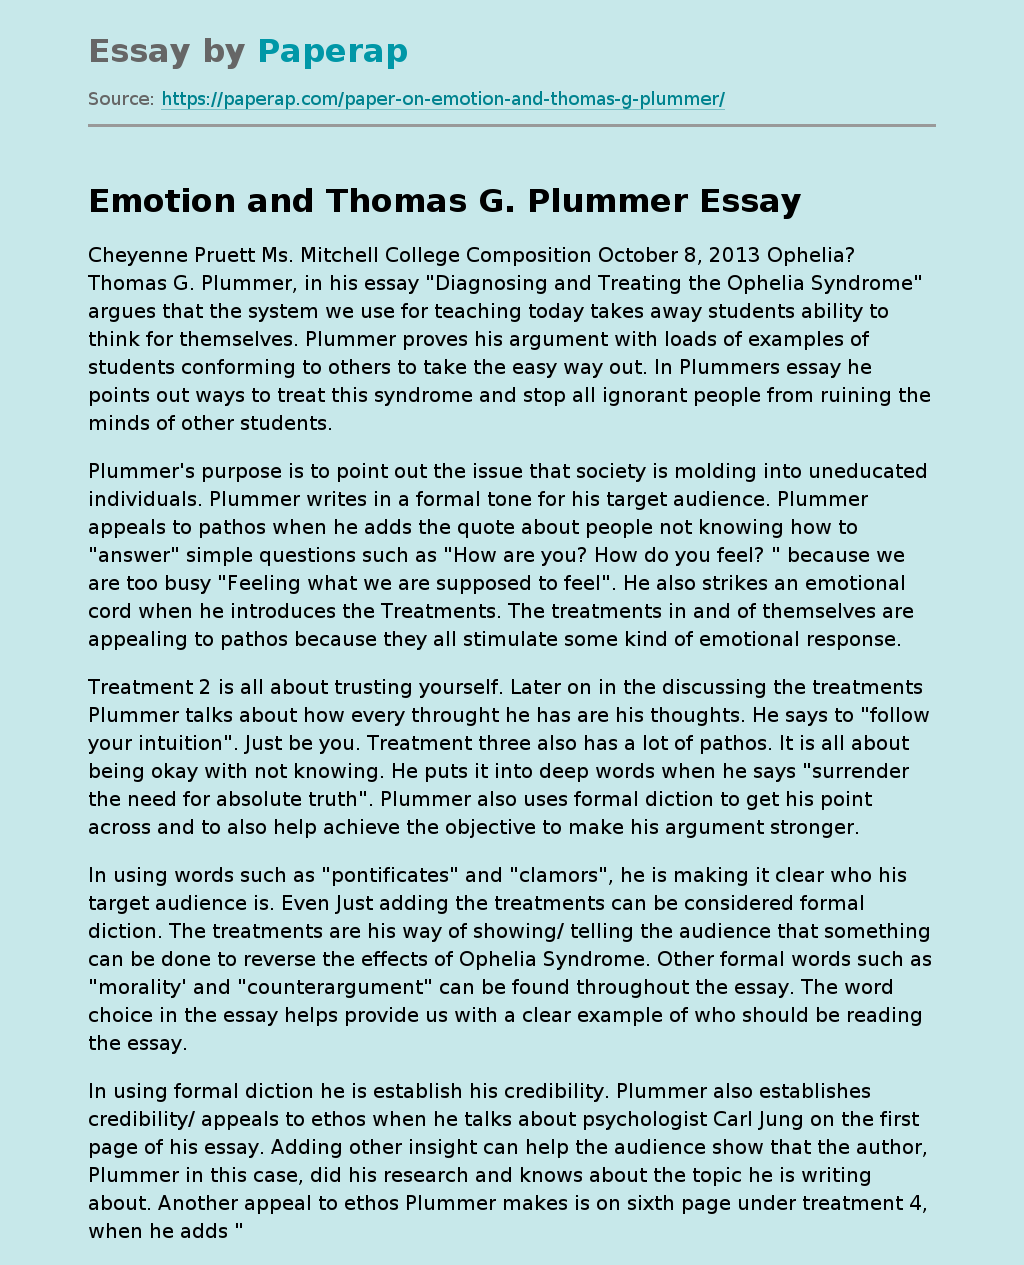 Emotion and Thomas G. Plummer